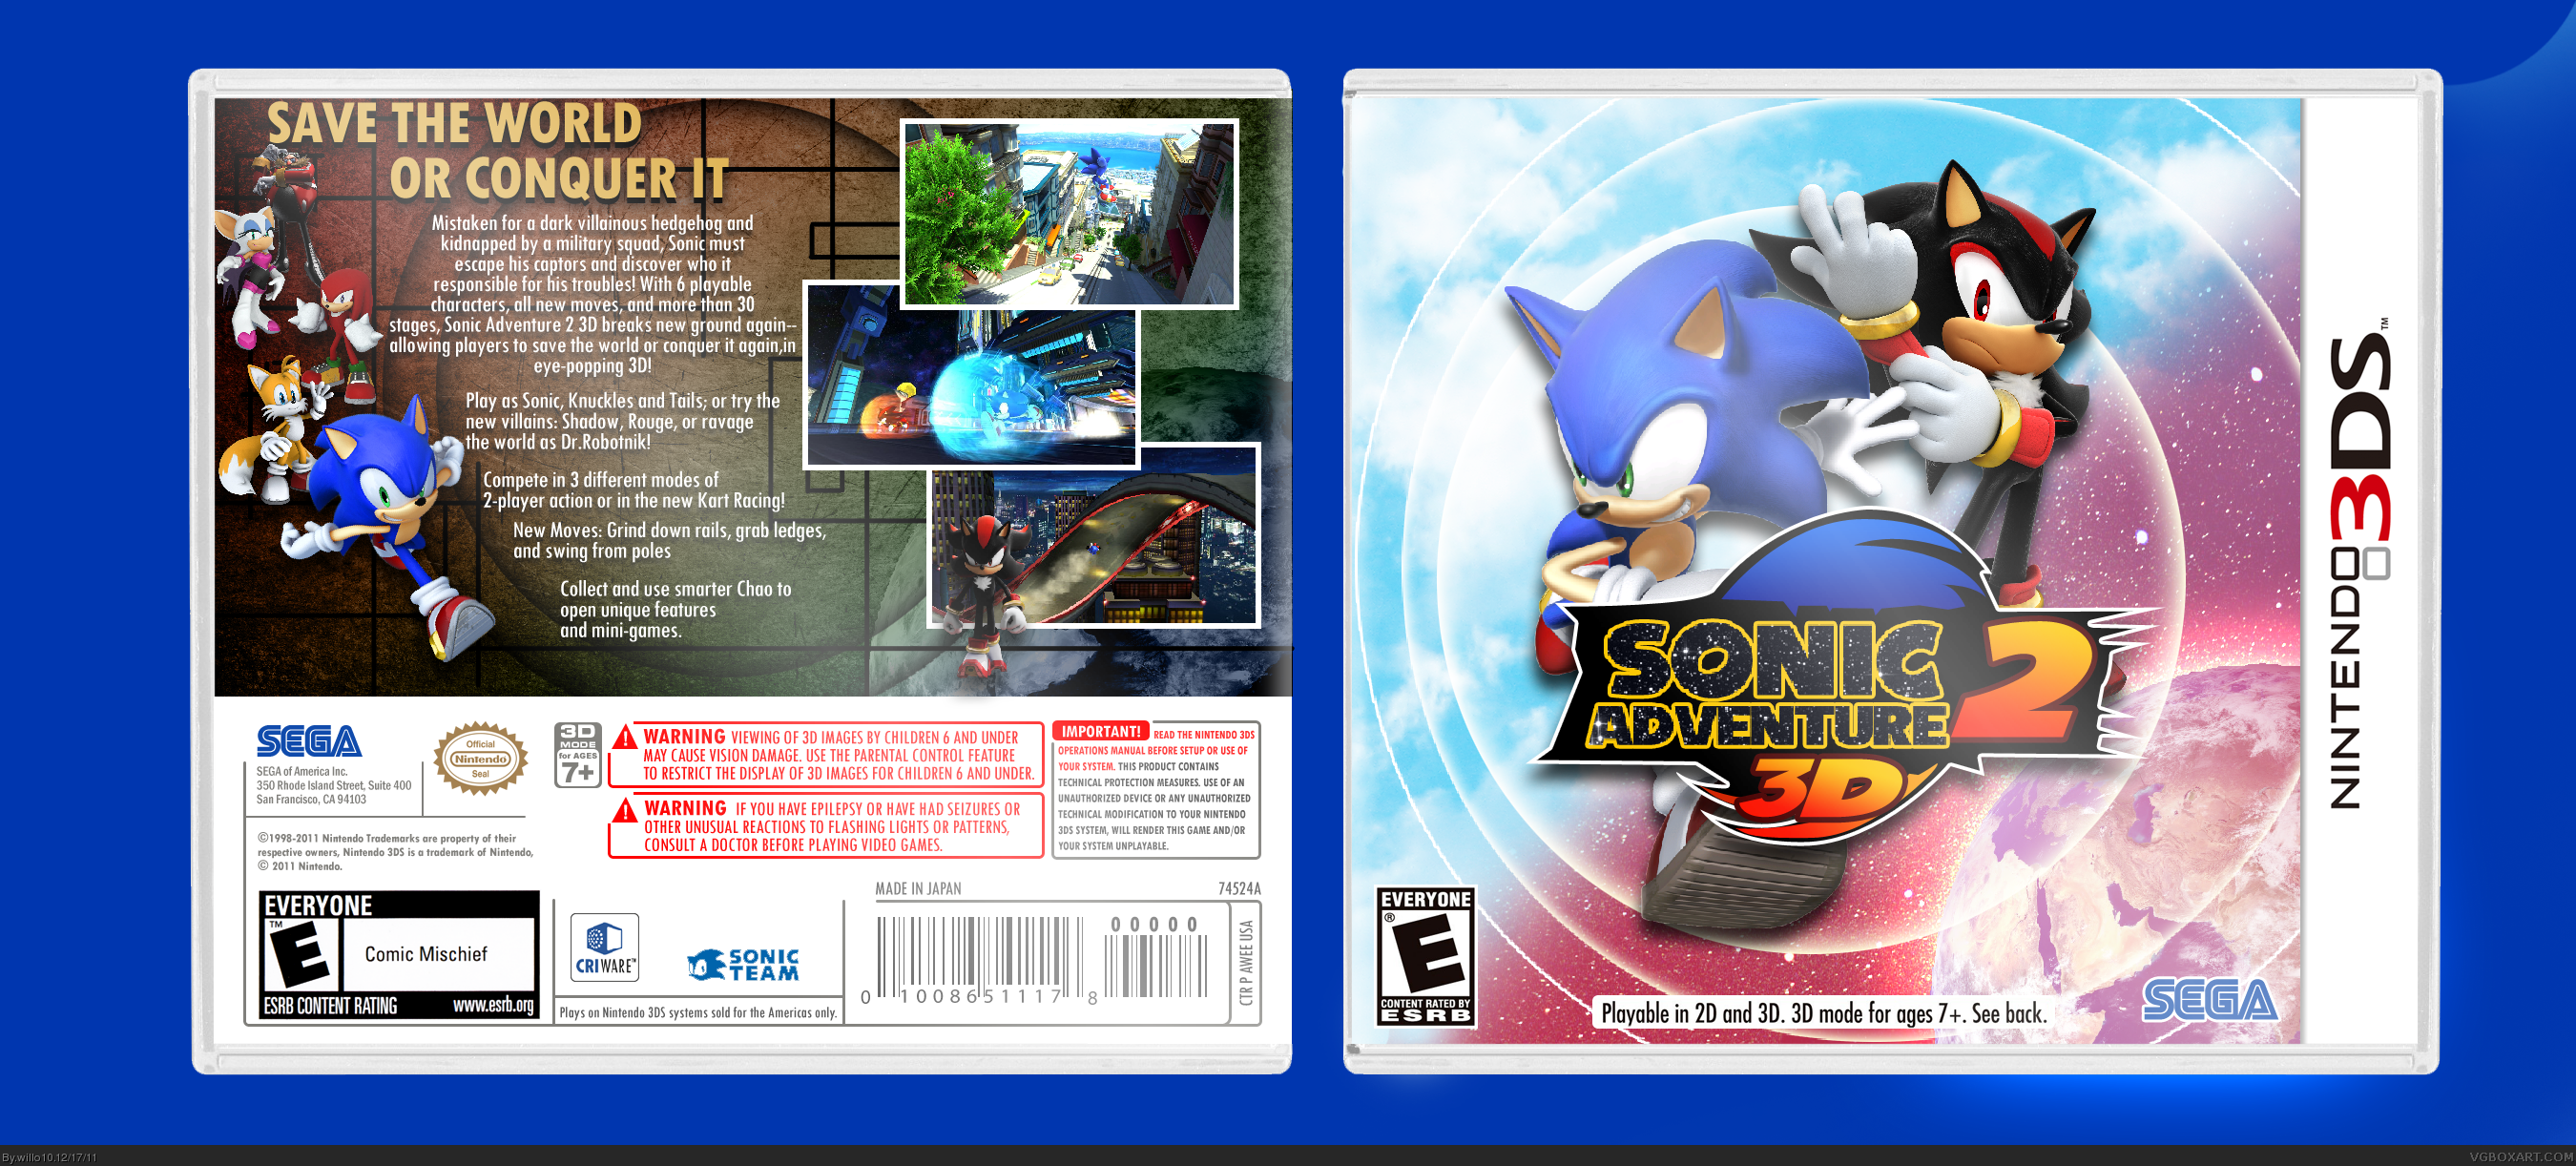 Sonic Adventure 2 3D box cover